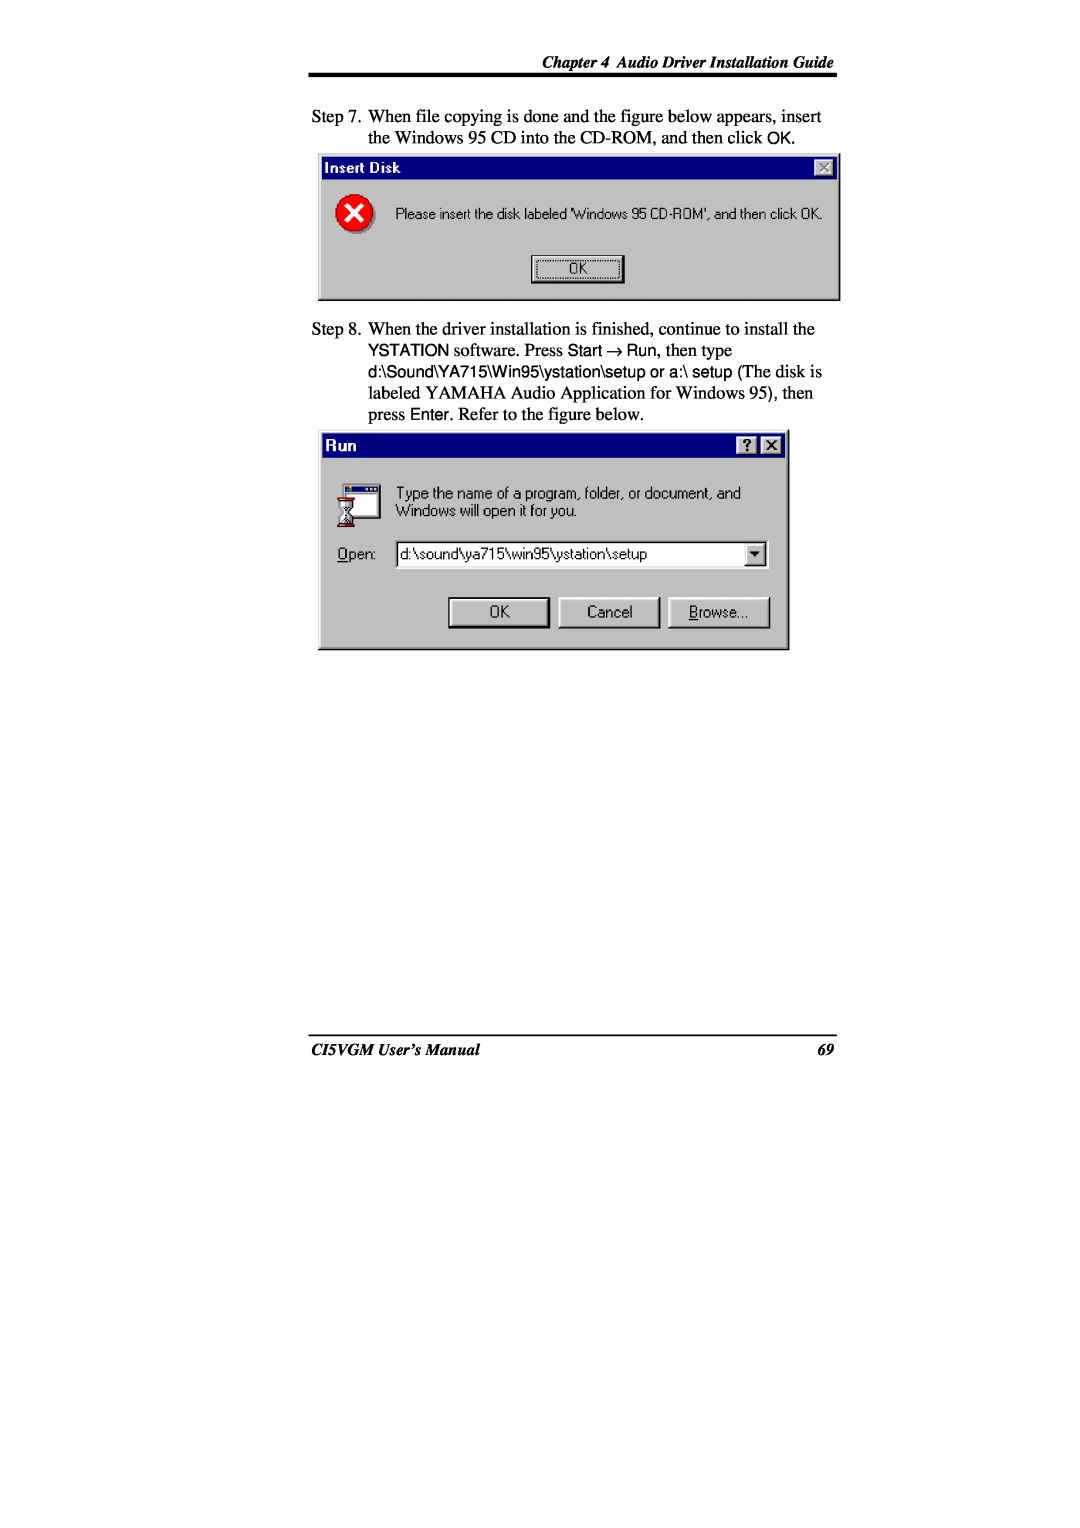 IBM CI5VGM Series user manual 